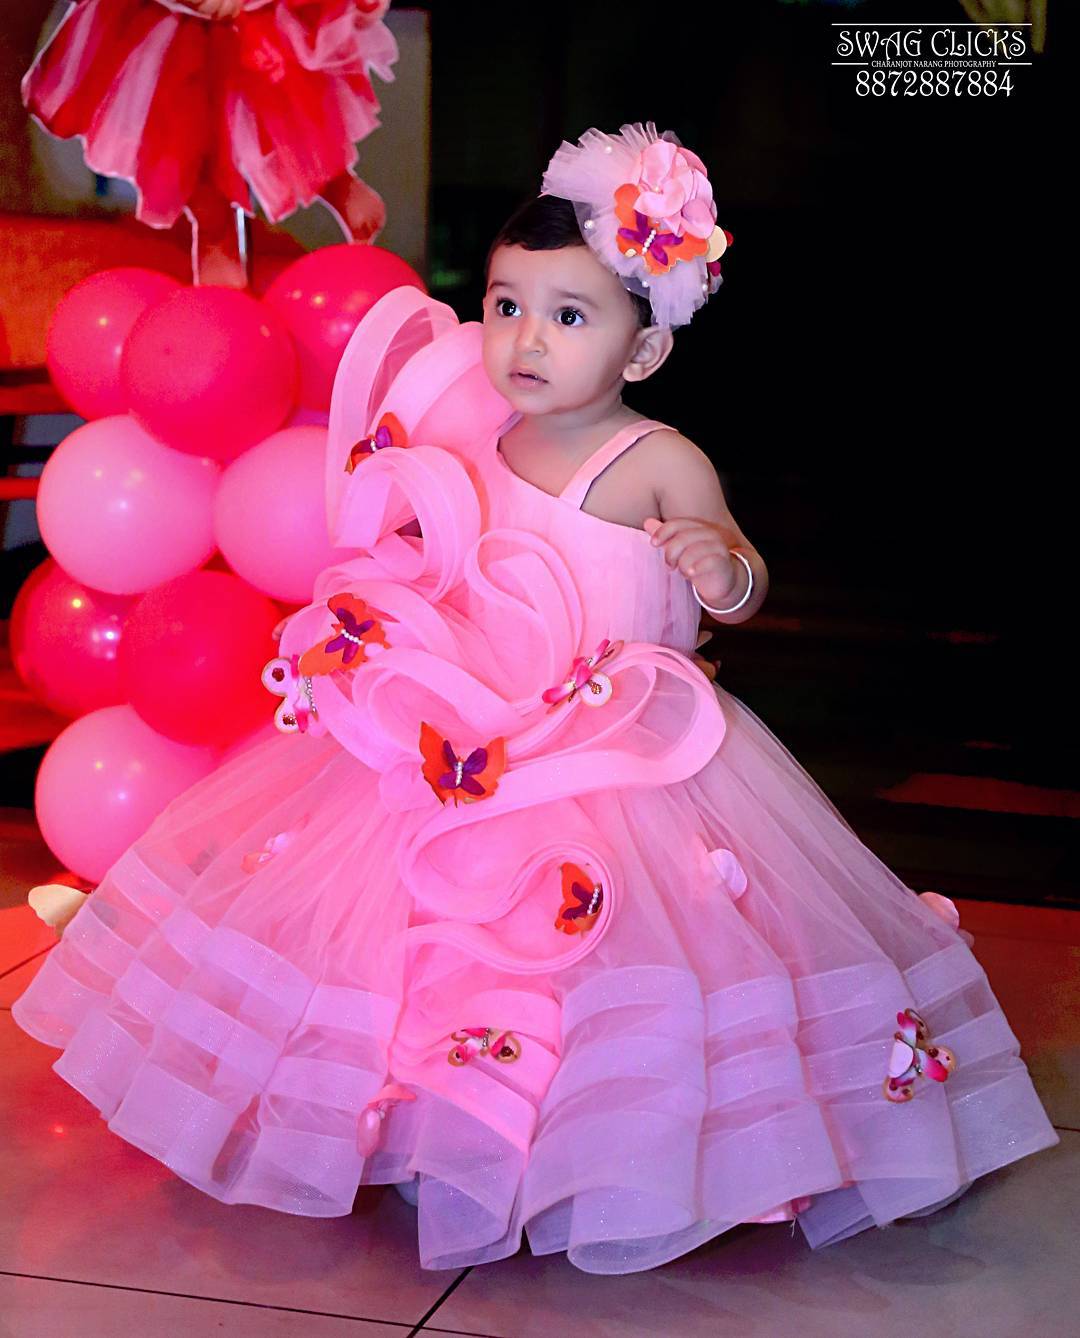 baby girl fancy dress design